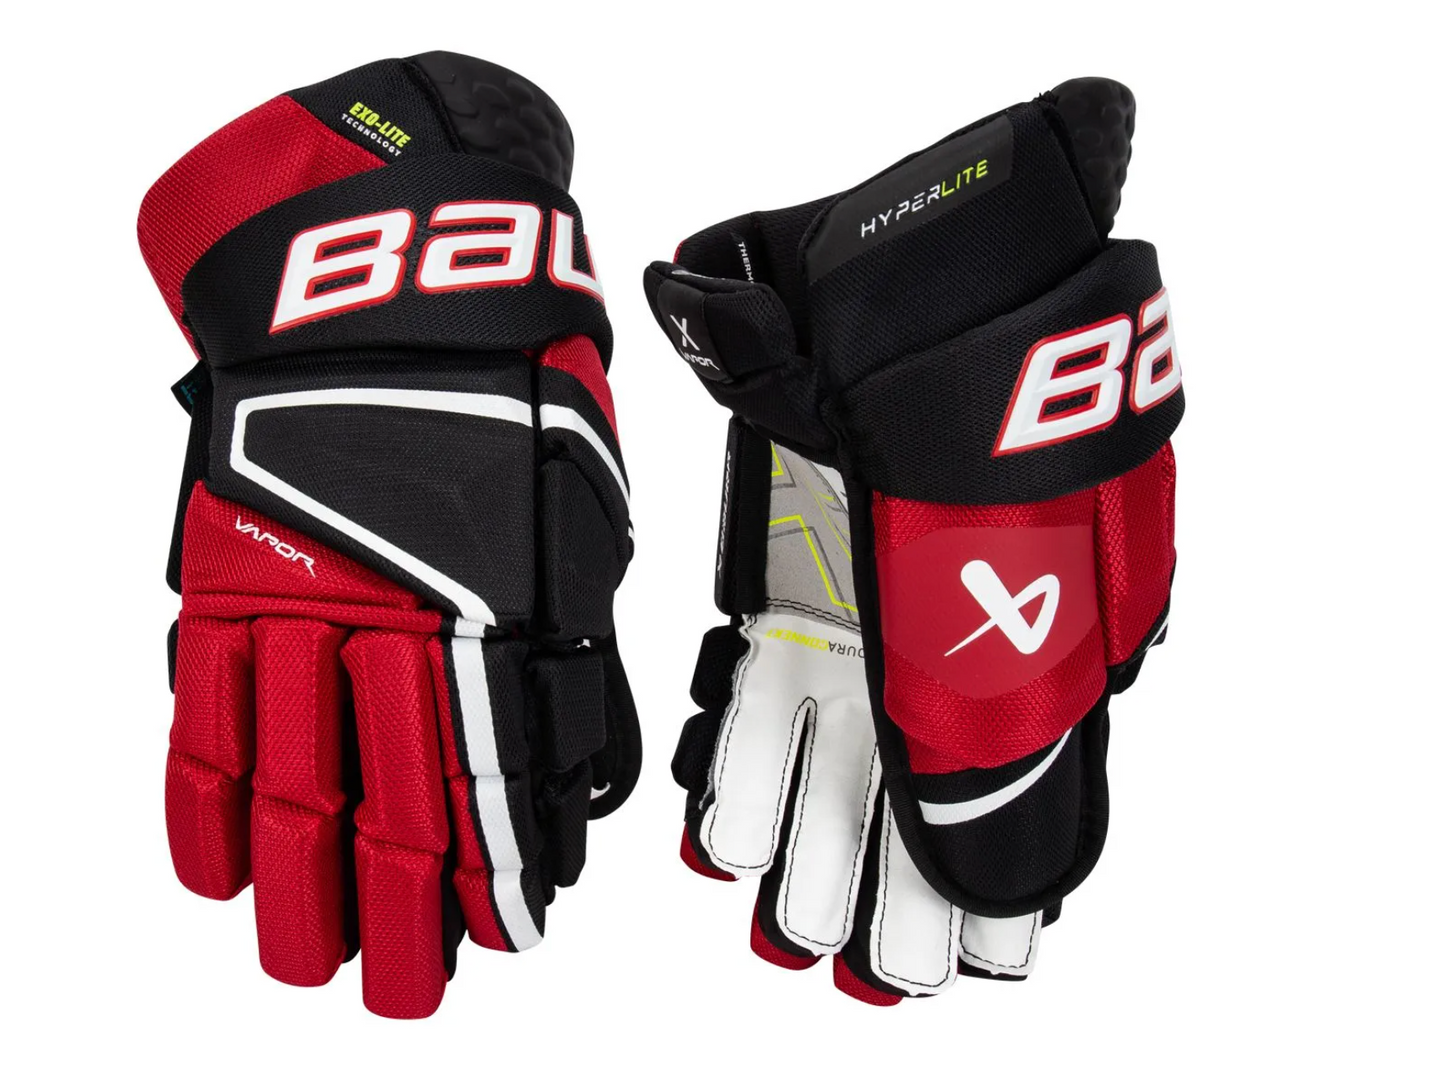 Bauer Vapor HyperLite Hockey Gloves - Senior